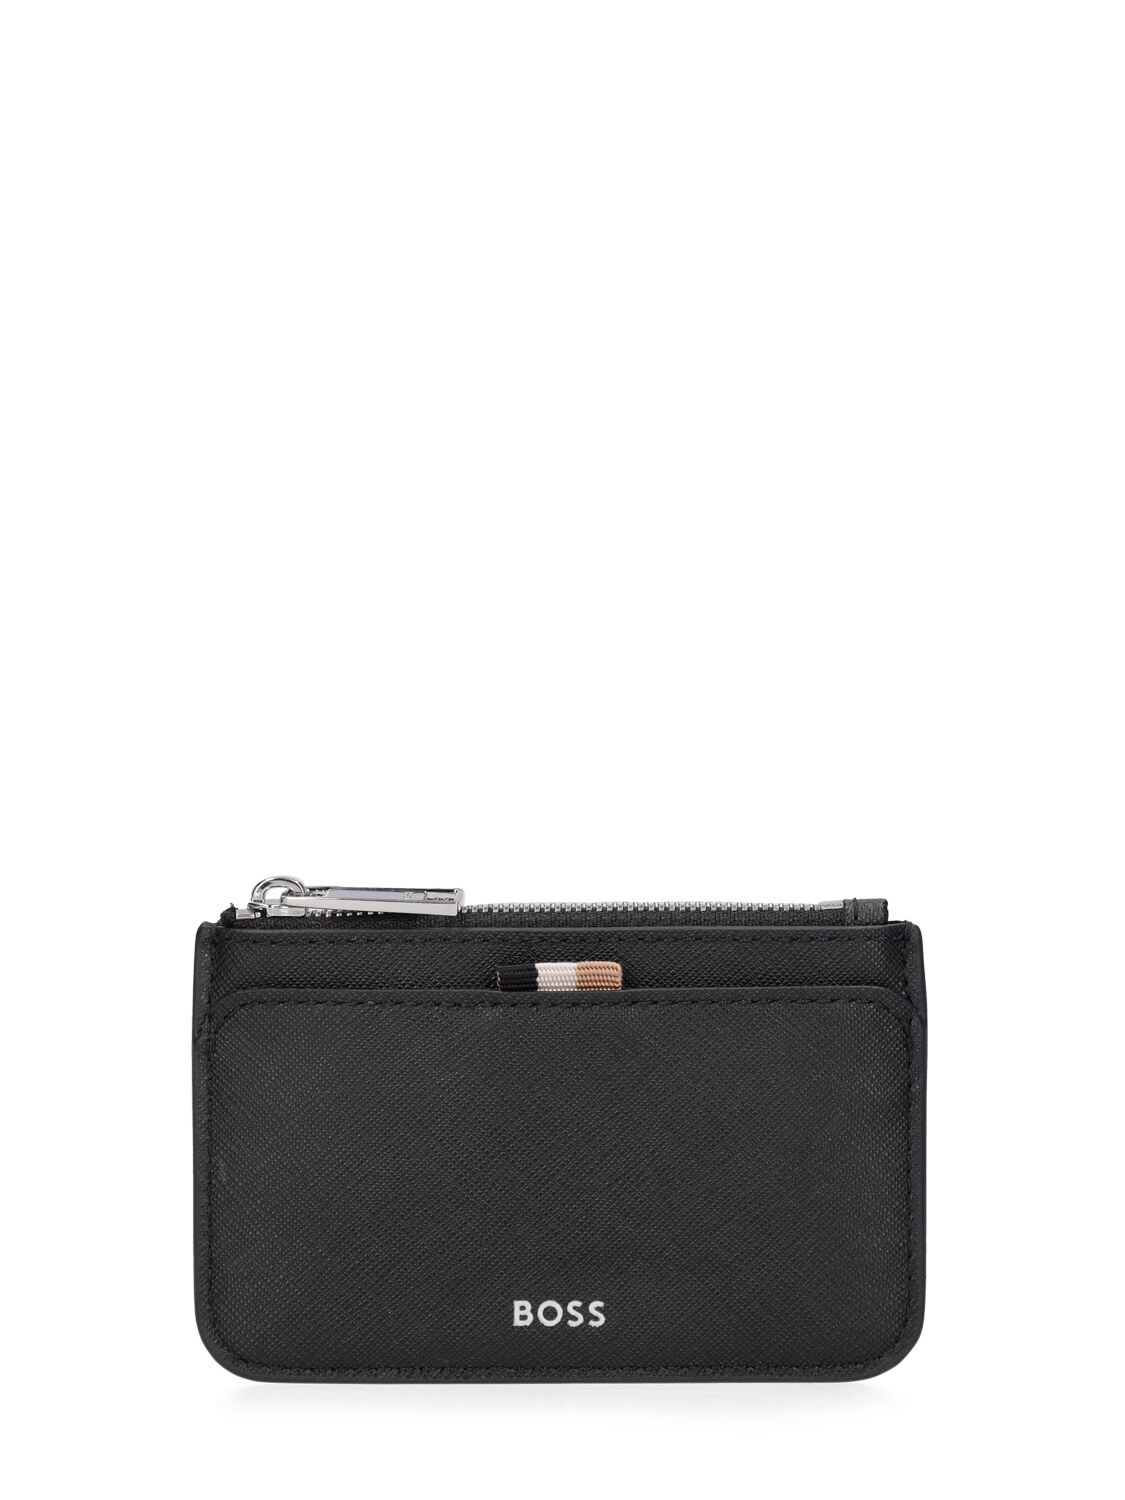 Hugo Boss Zair Zip Card Holder In Black